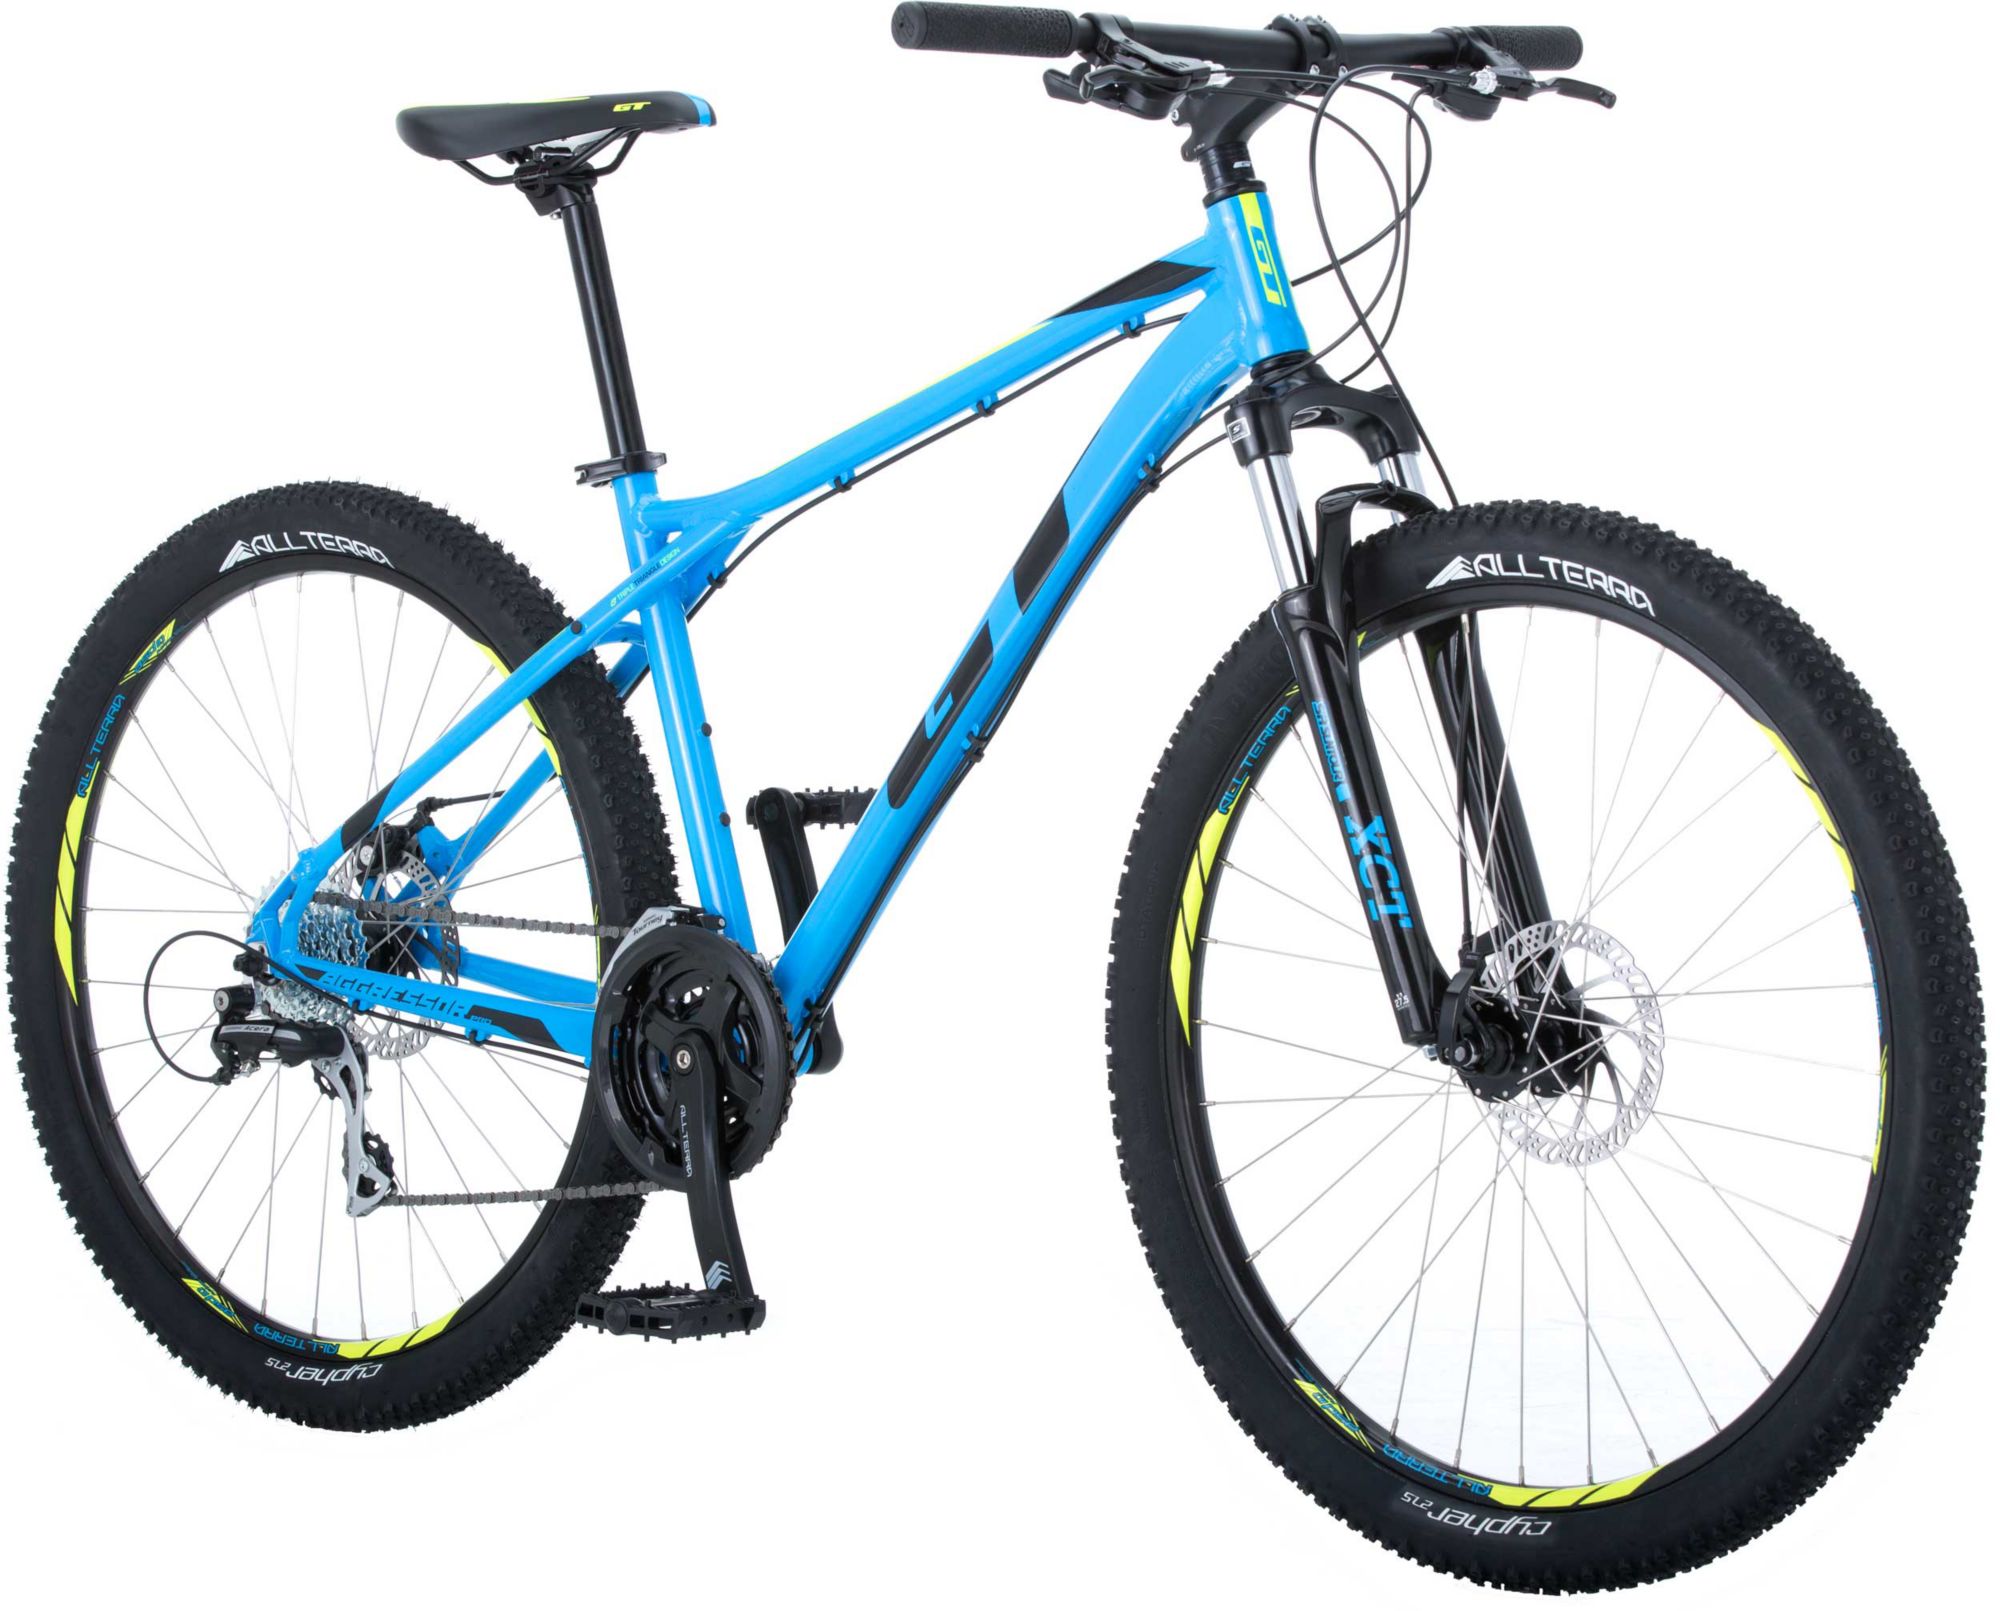 blue mens mountain bike